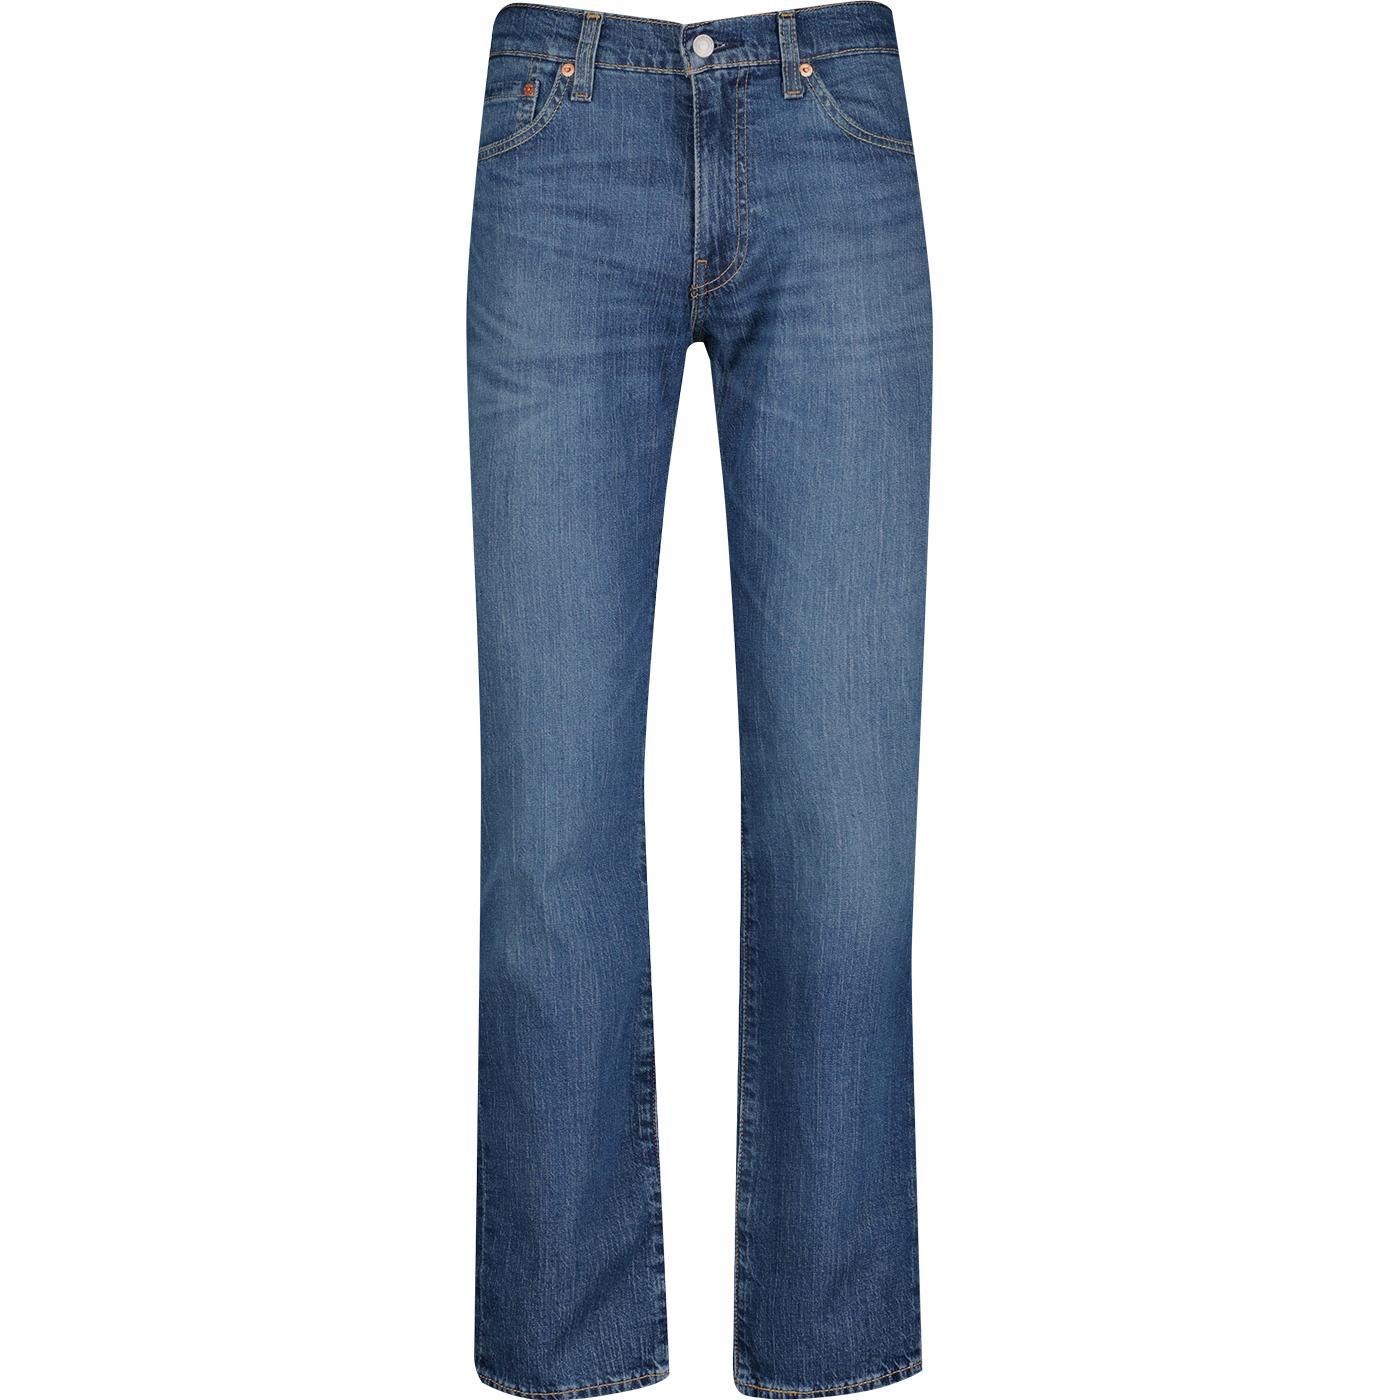 LEVI'S® 511™ Slim Fit Men's Retro Jeans (Shitake)